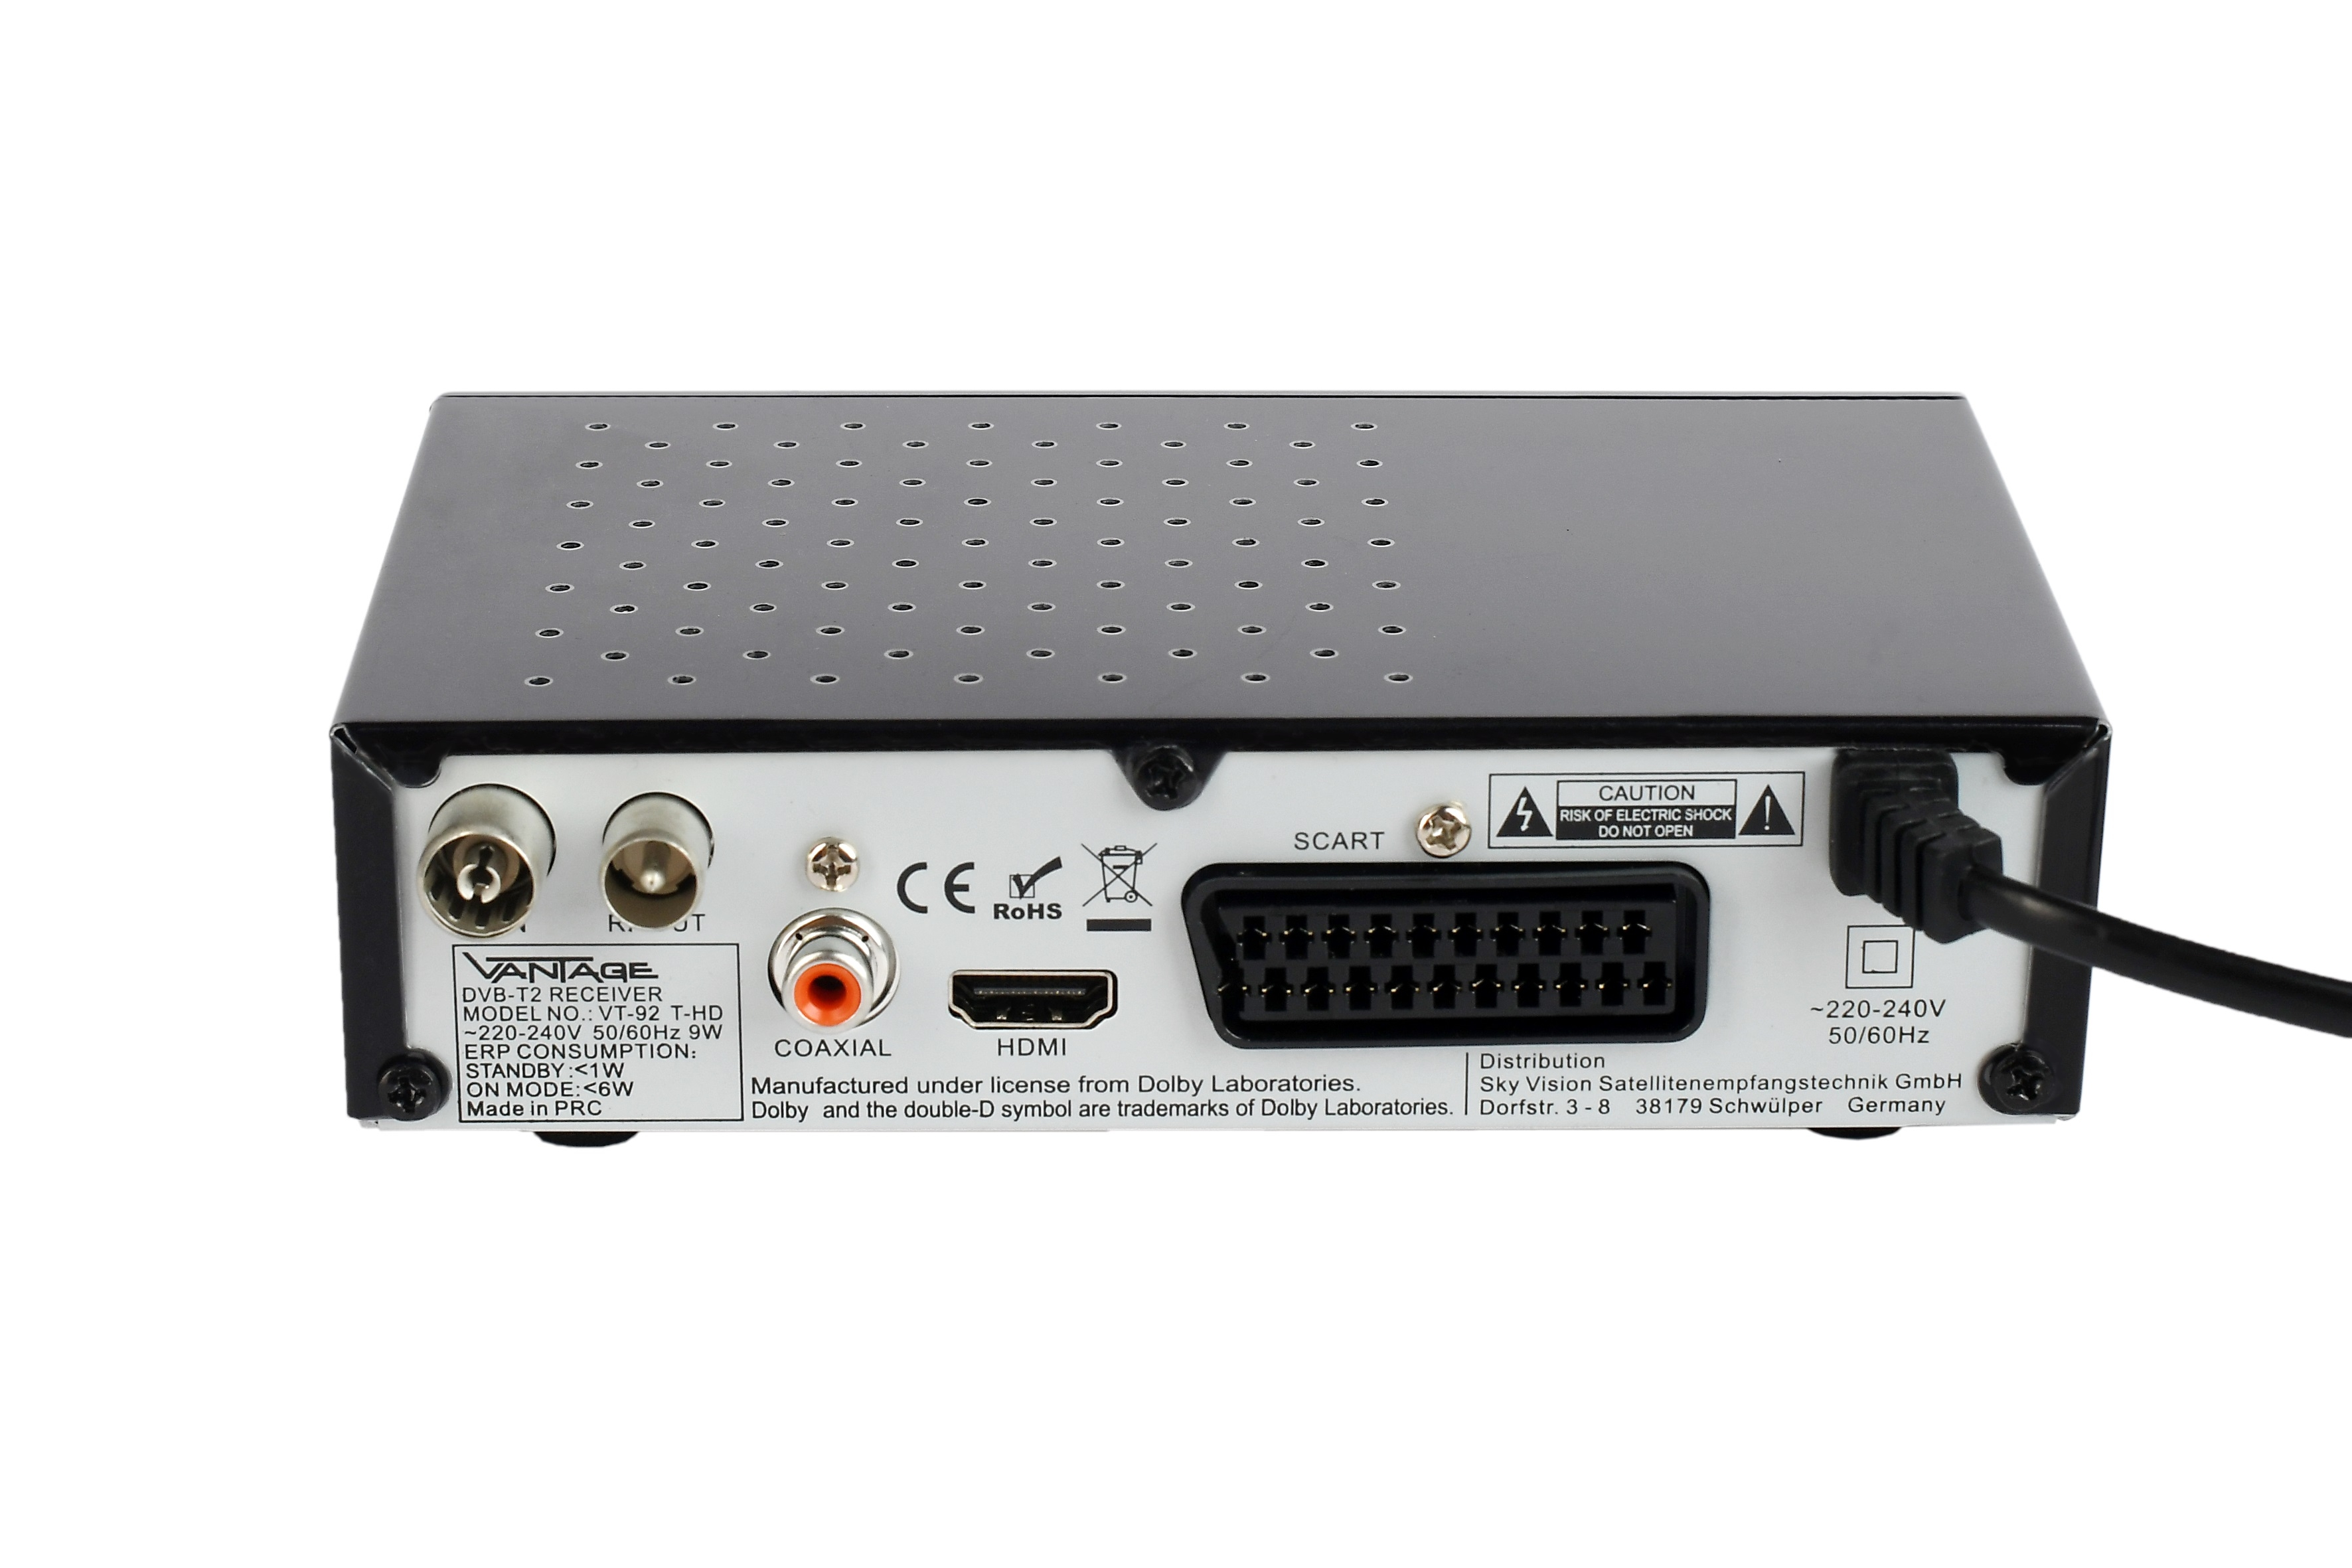 (H.265), VANTAGE schwarz) VT-92 DVB-T-Receiver DVB-T2 (DVB-T,